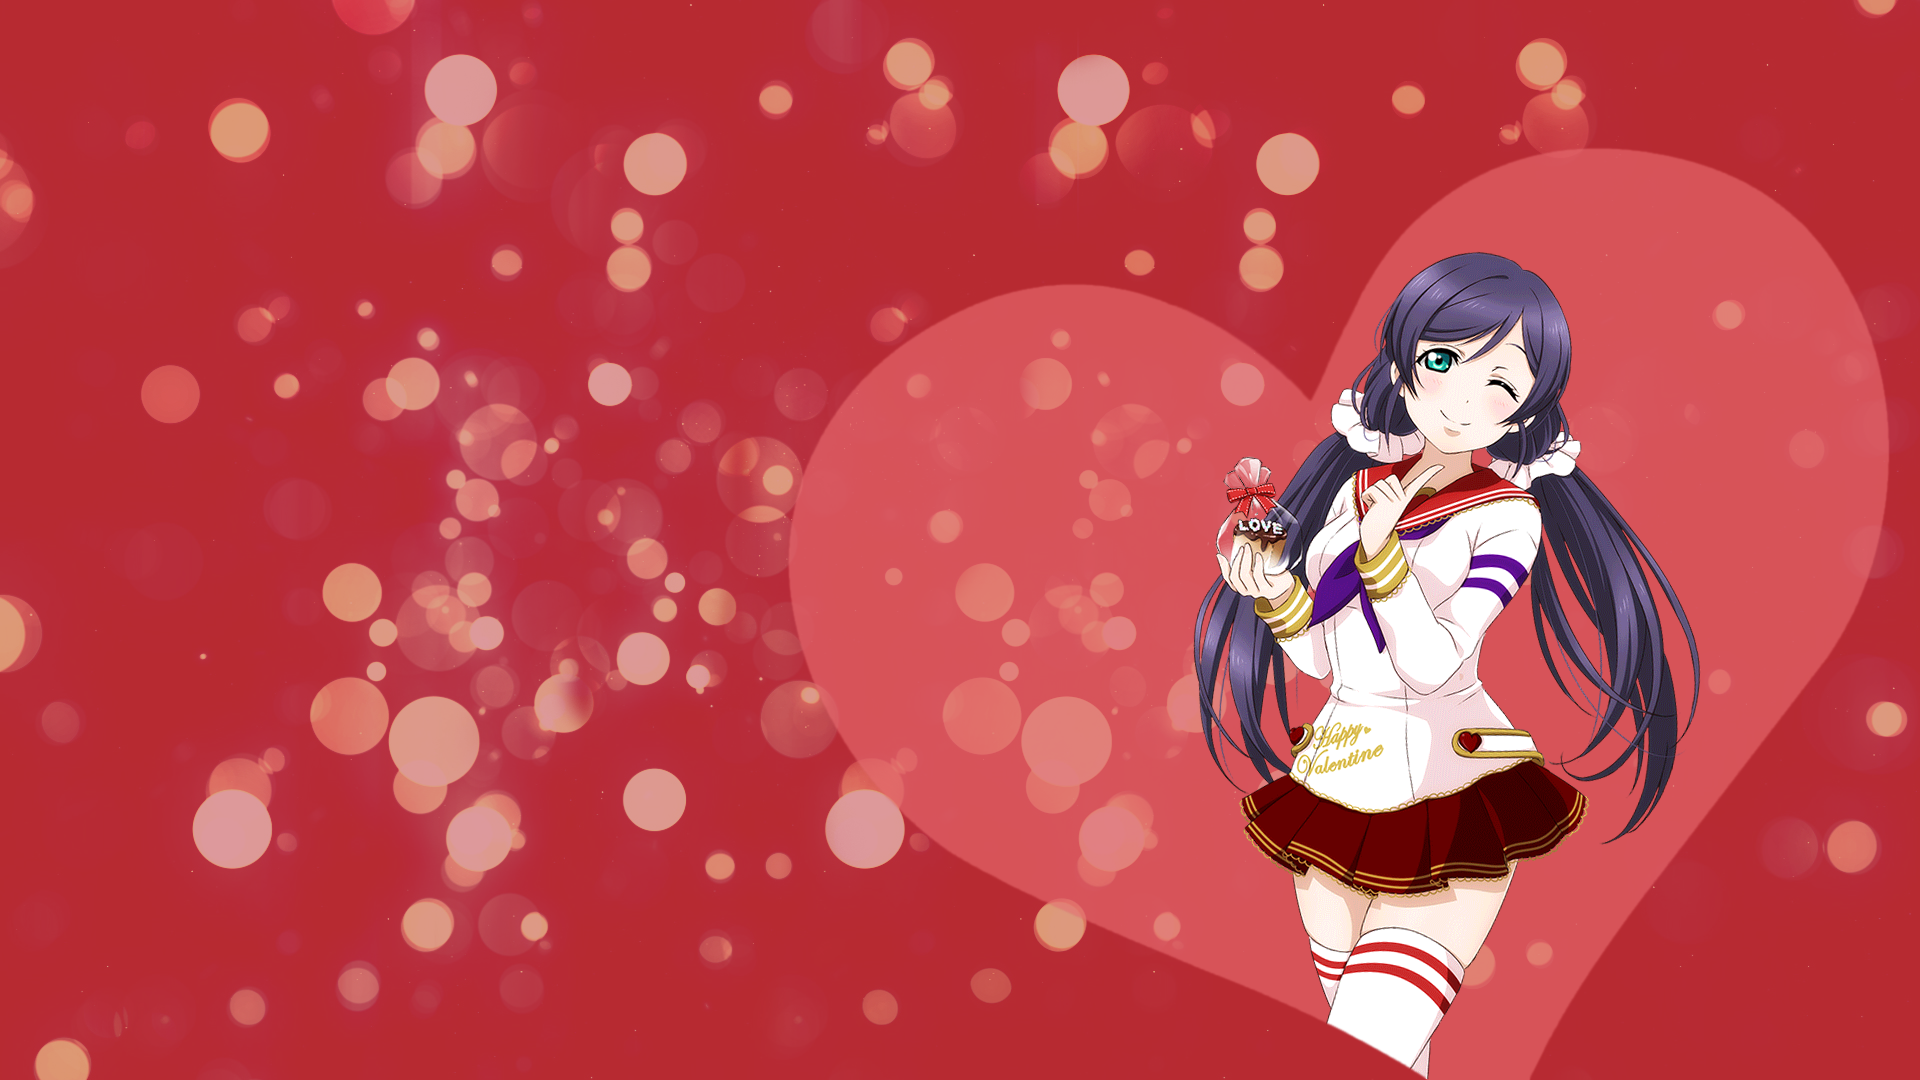 Anime 1920x1080 anime anime girls Love Live! Toujou Nozomi thigh-highs red background heart (design) long hair skirt one eye closed